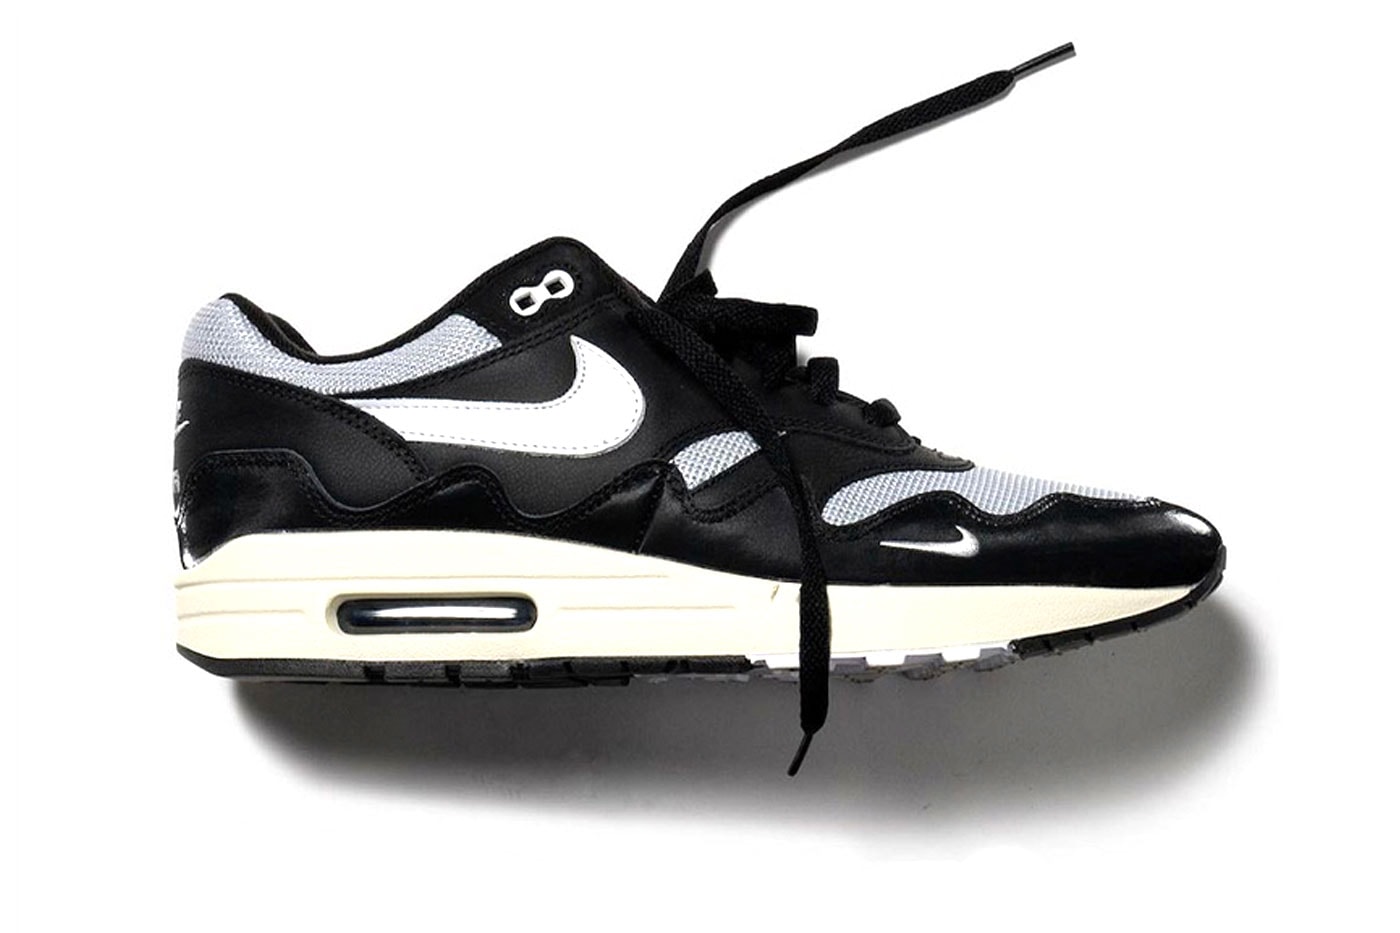 Patta x Nike Air Max 1 in “Black” Release Date footwear sneaker swooshes nubuck mesh leather black white silver